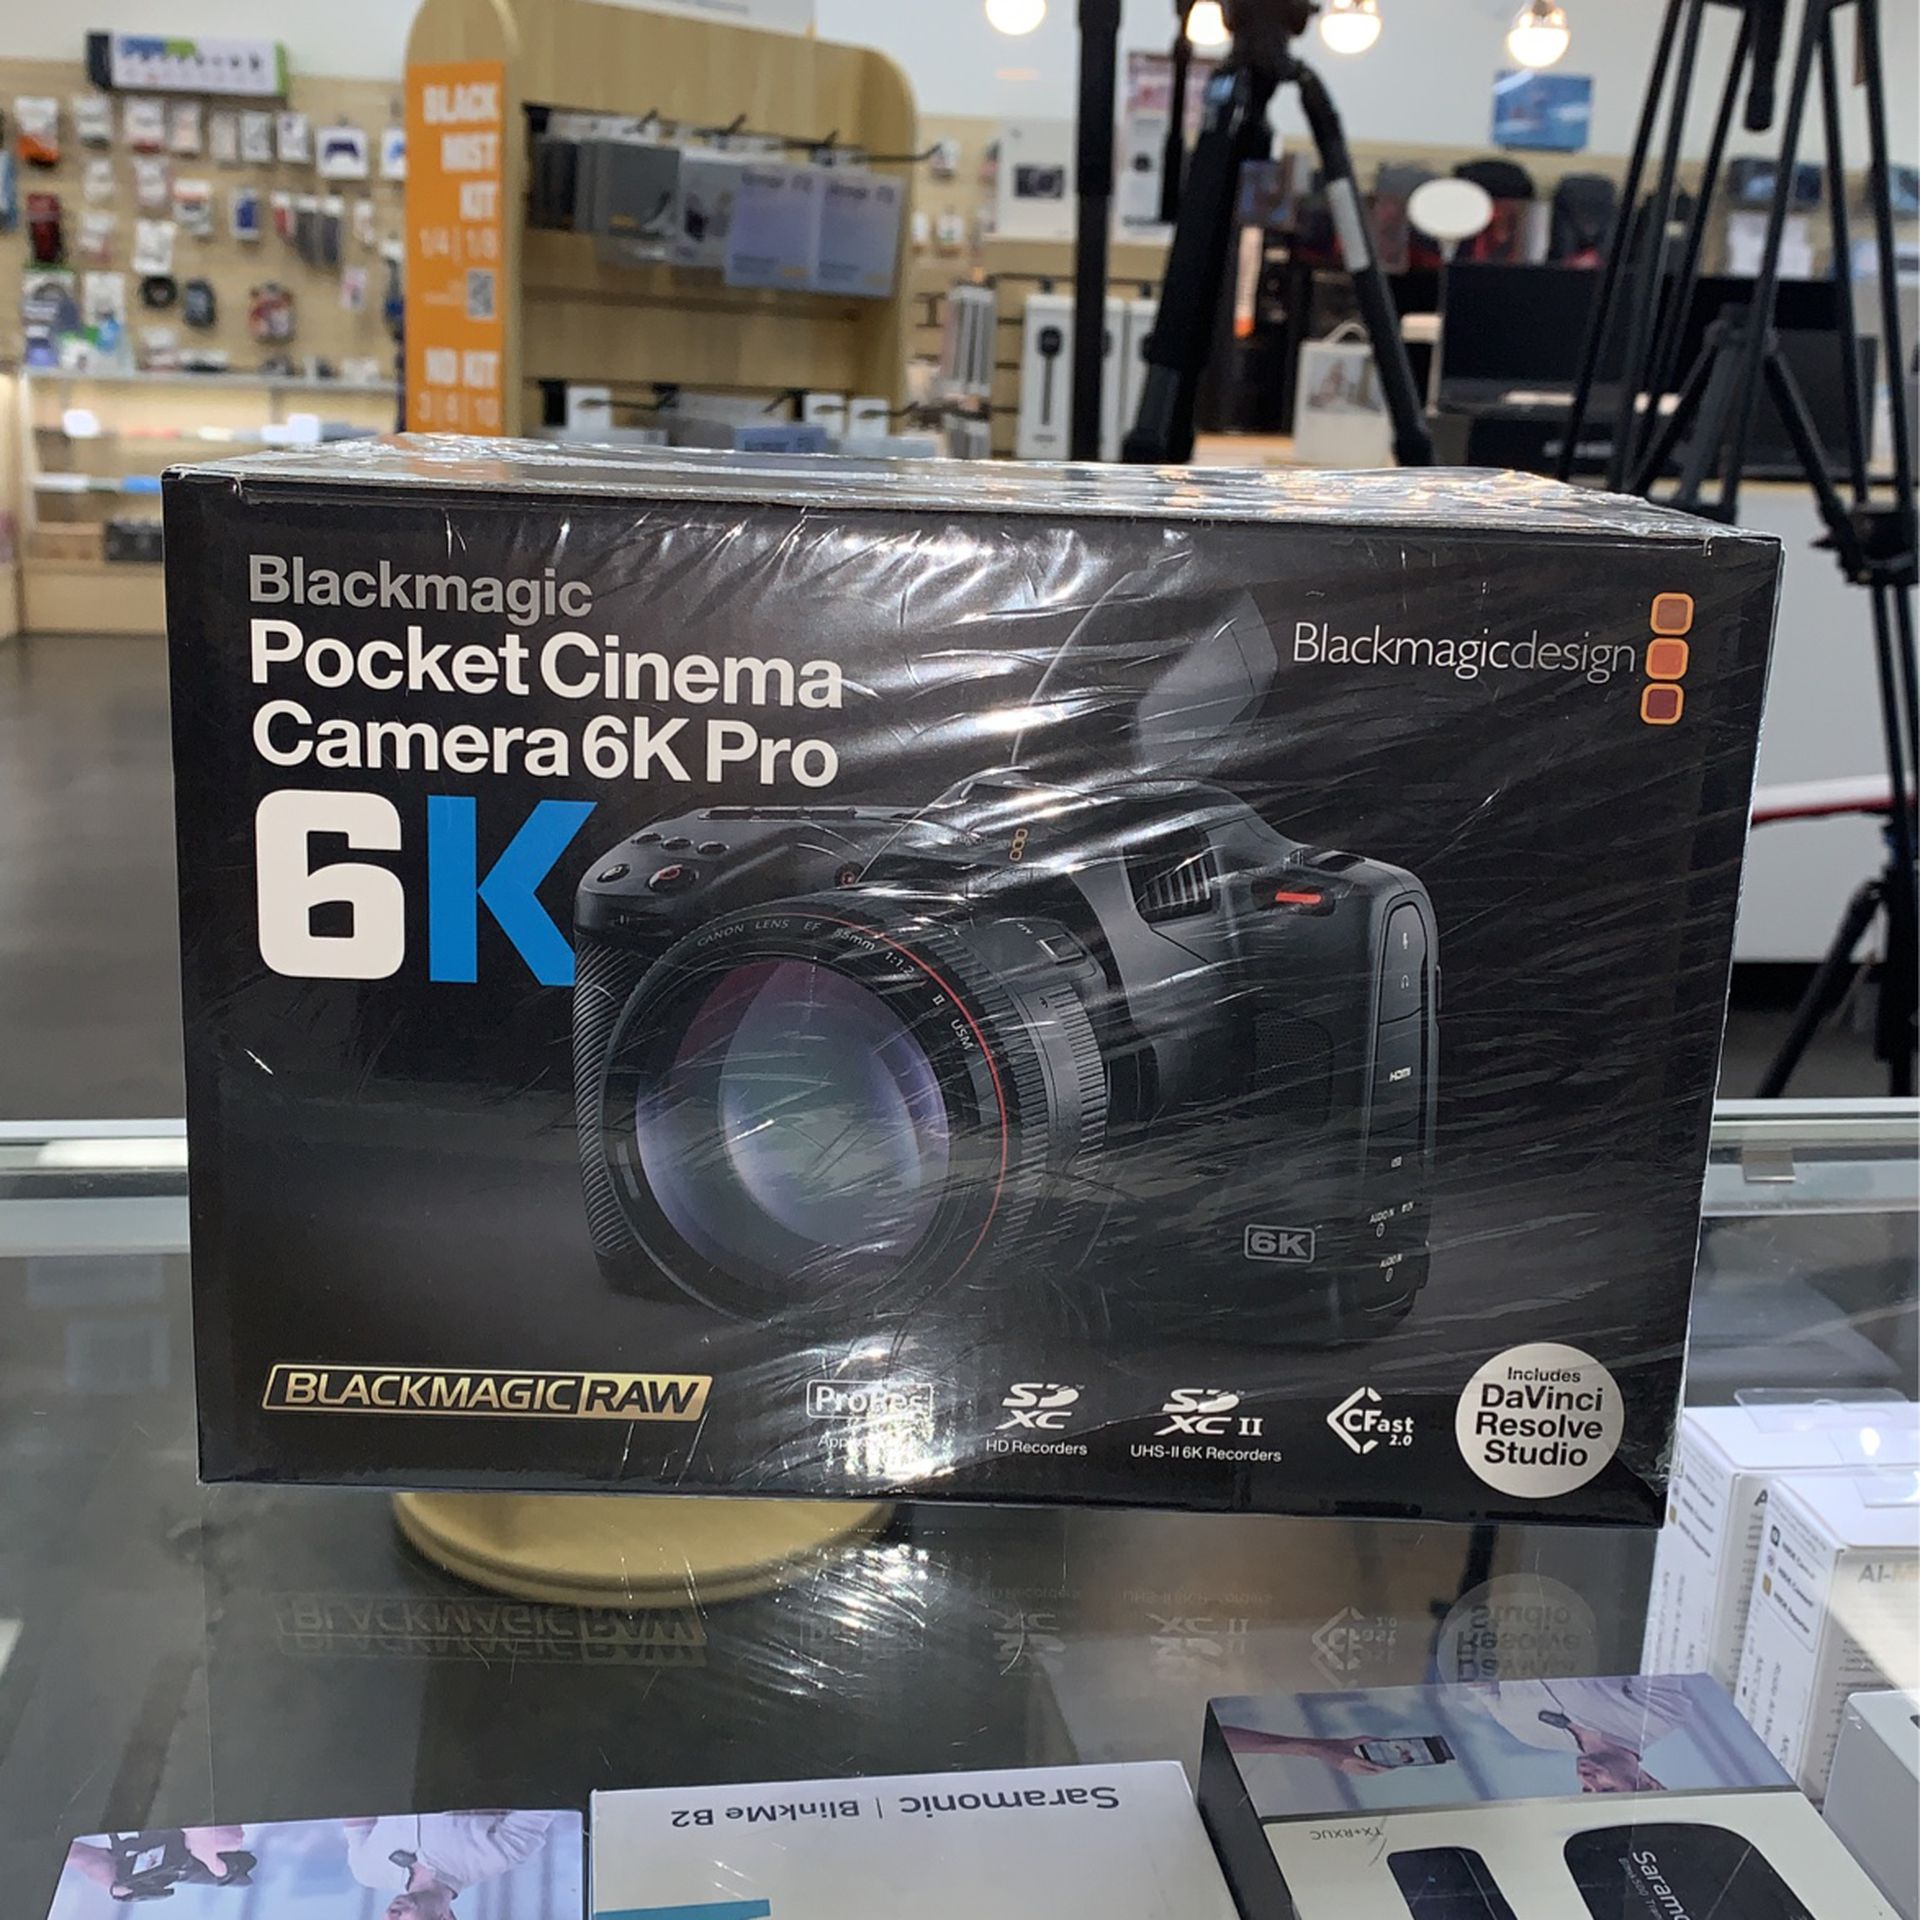 Blackmagic Pocket Cinema Camera 6K Pro.